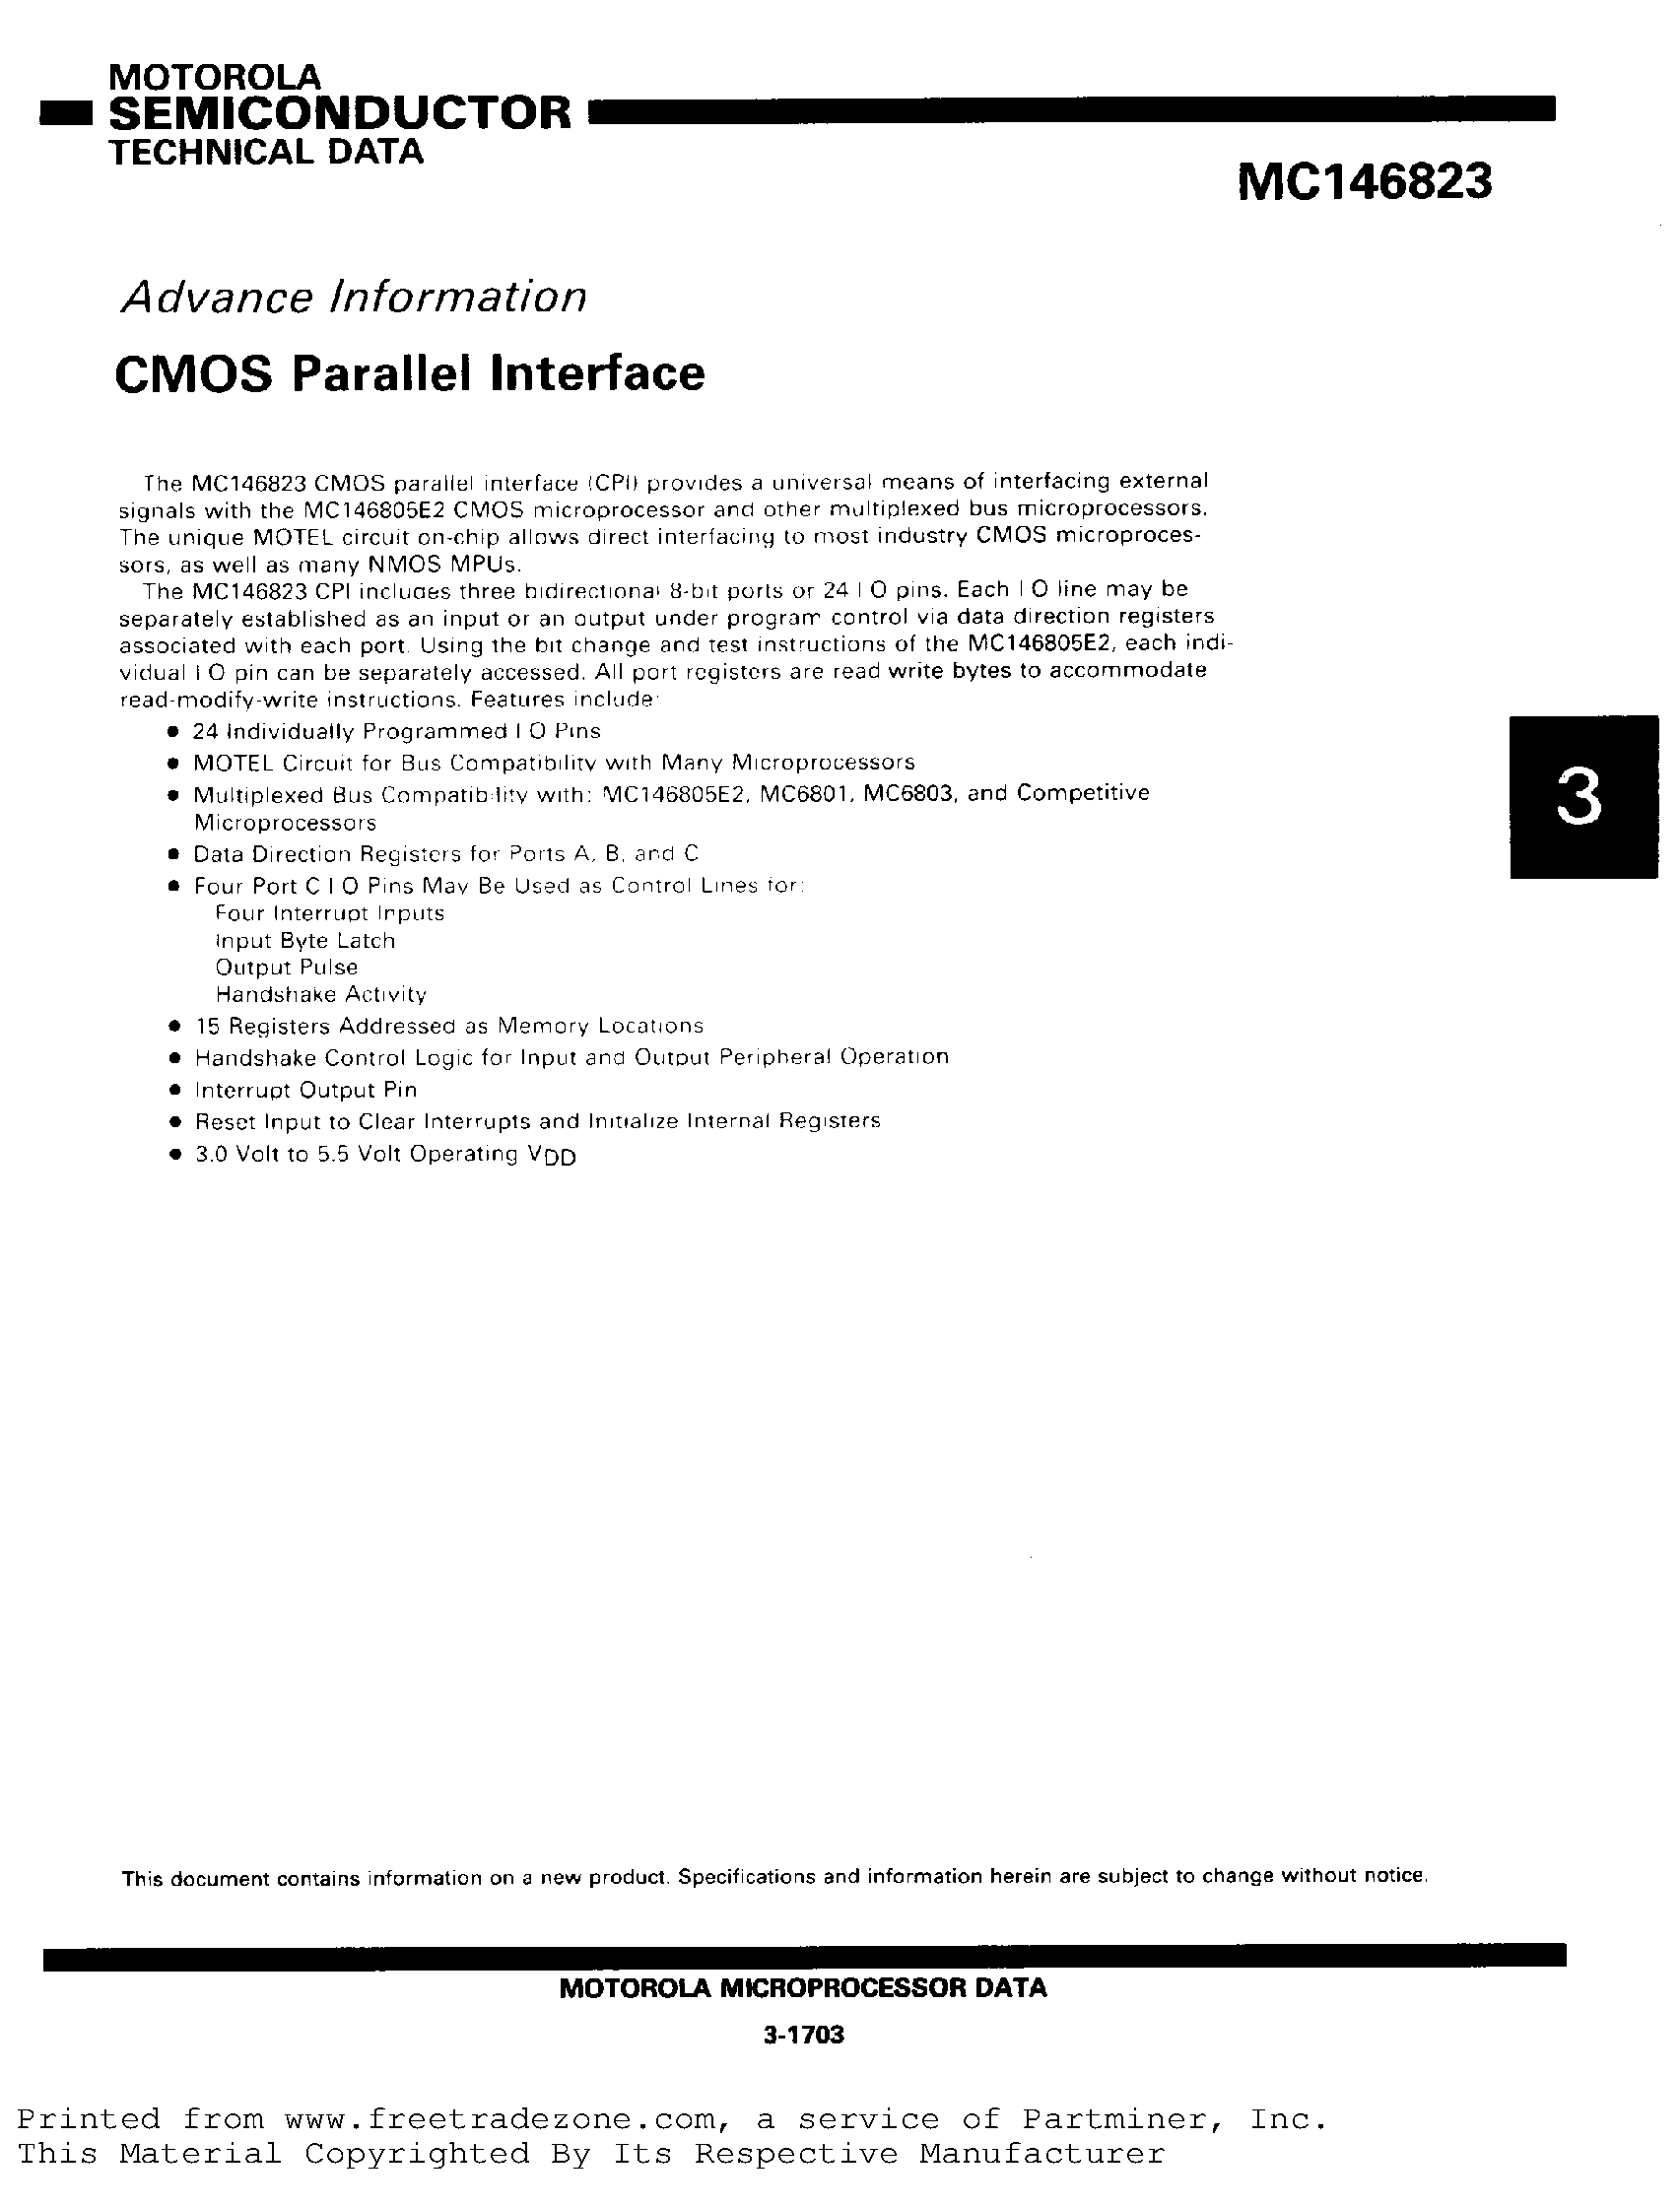 Datasheet MC146823 - CMOS Parallel Interface page 1